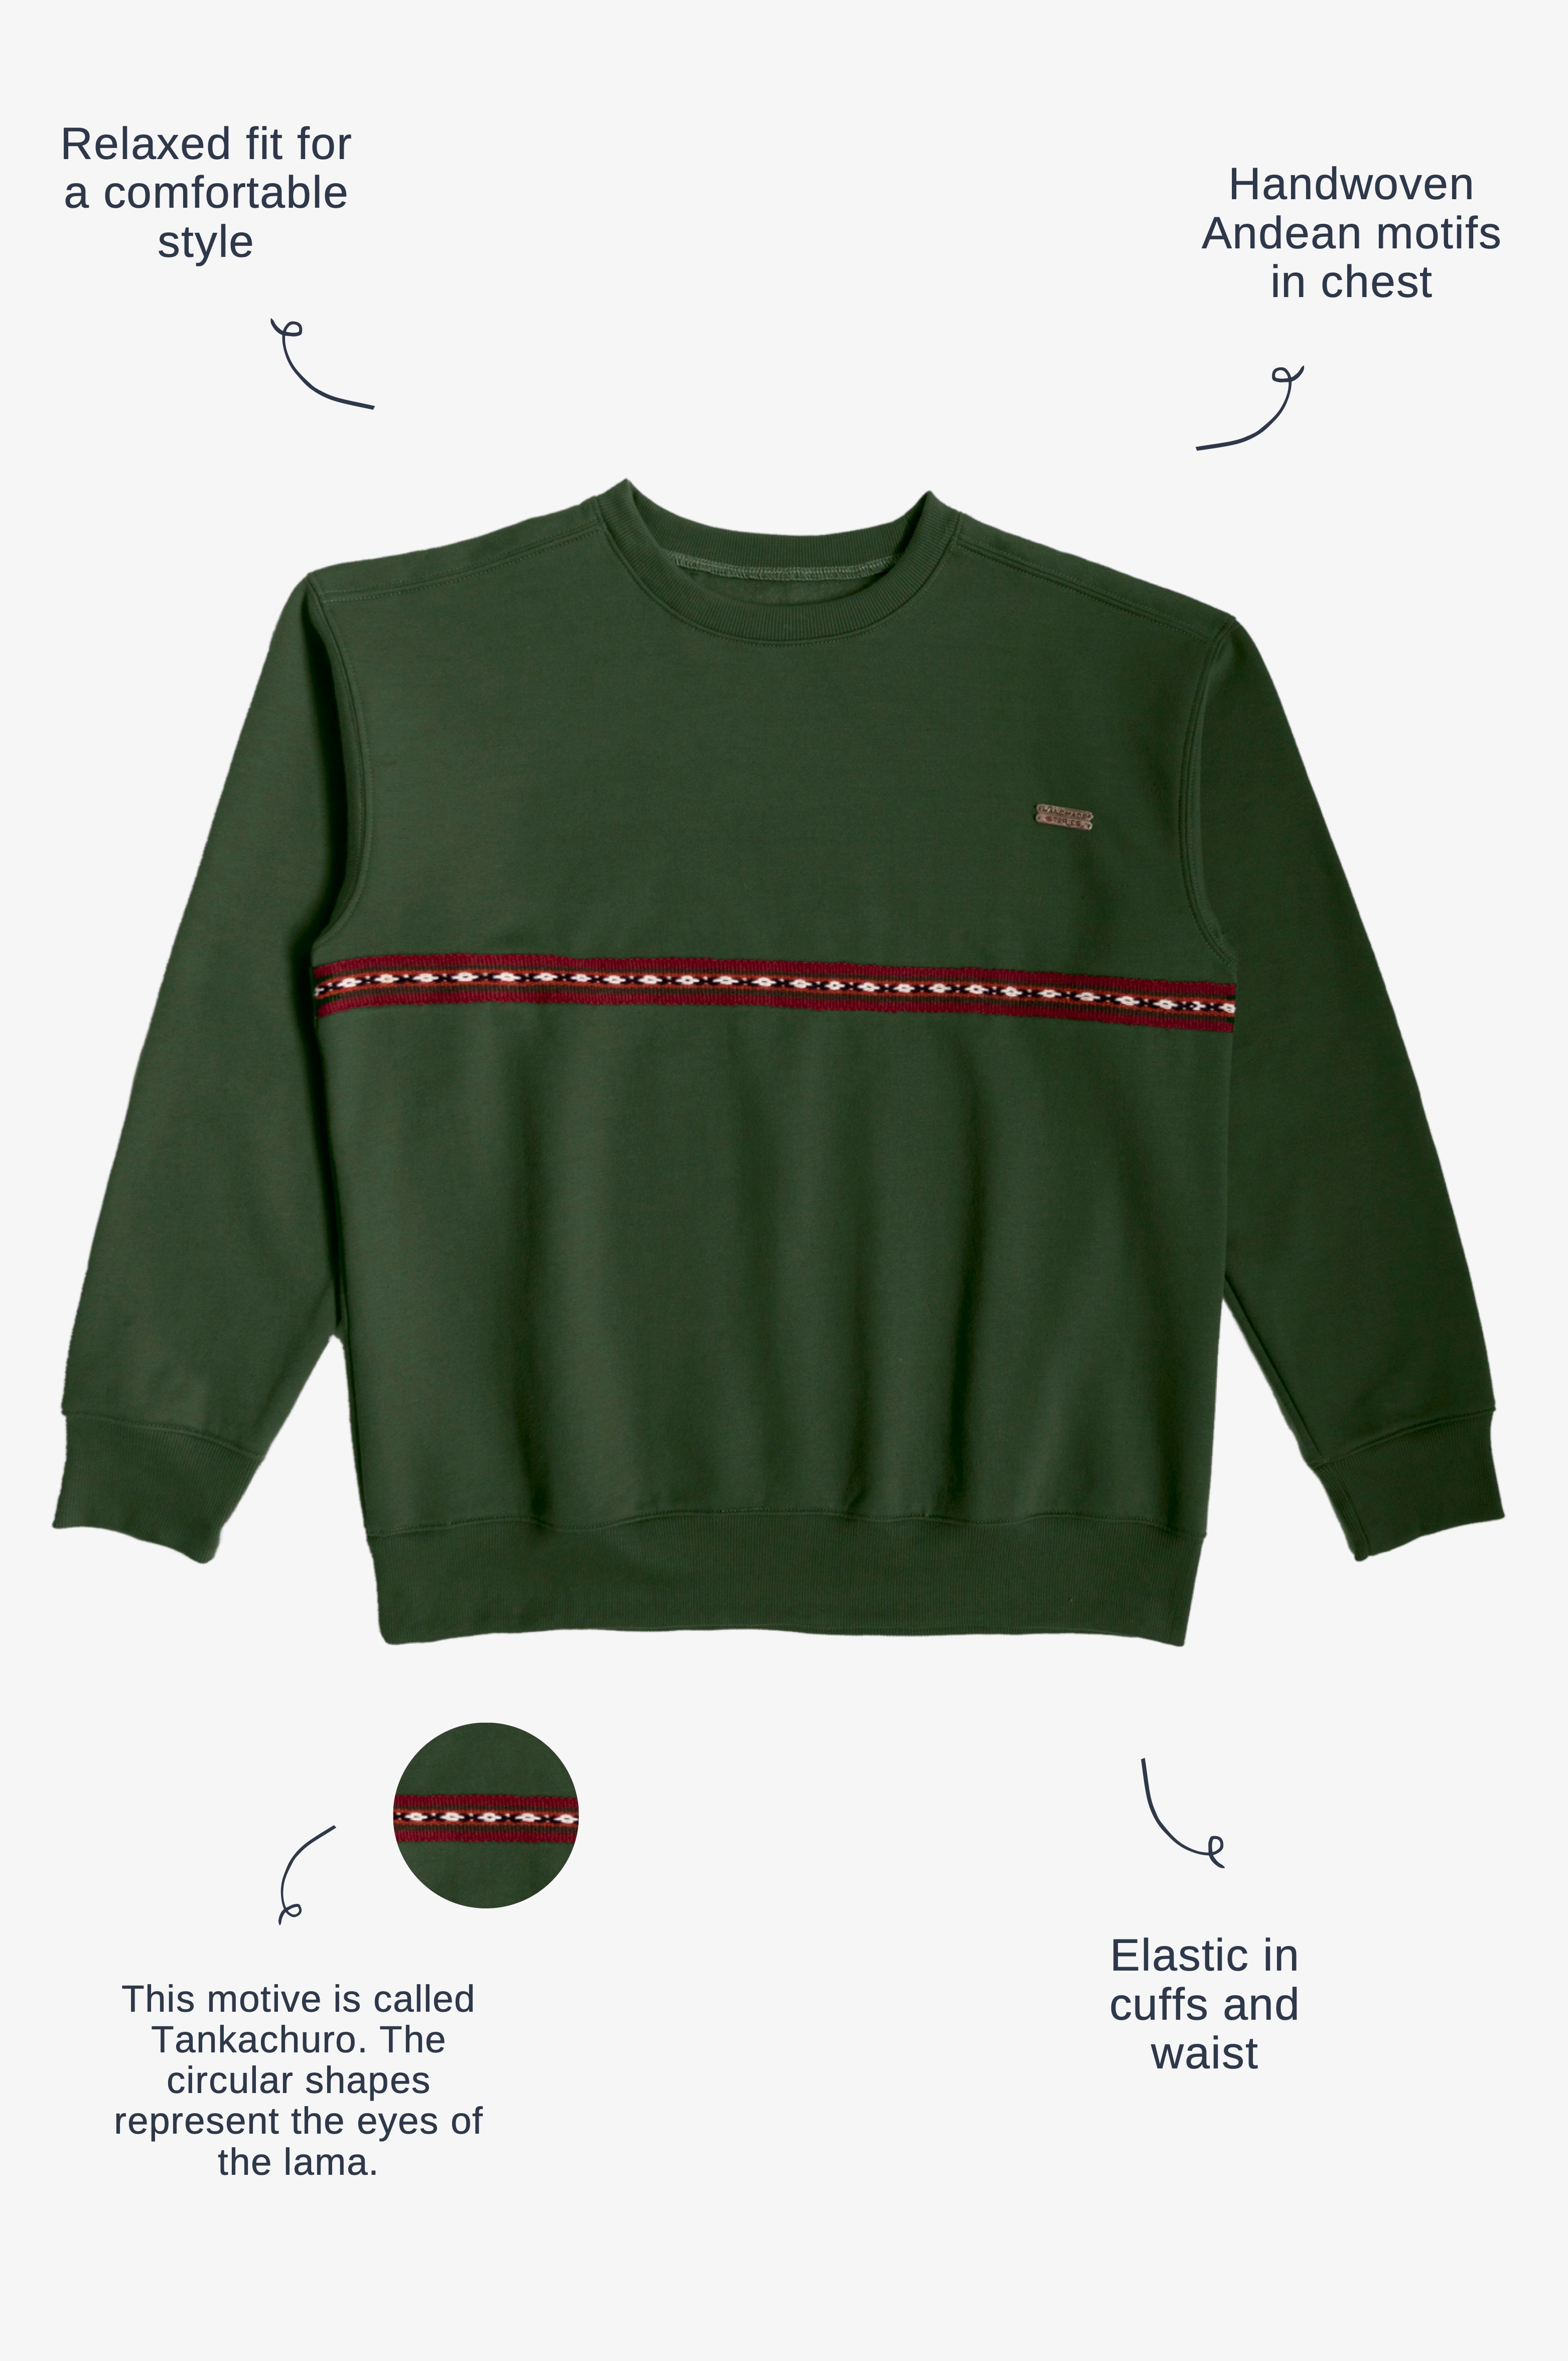 Green unisex sweatshirt